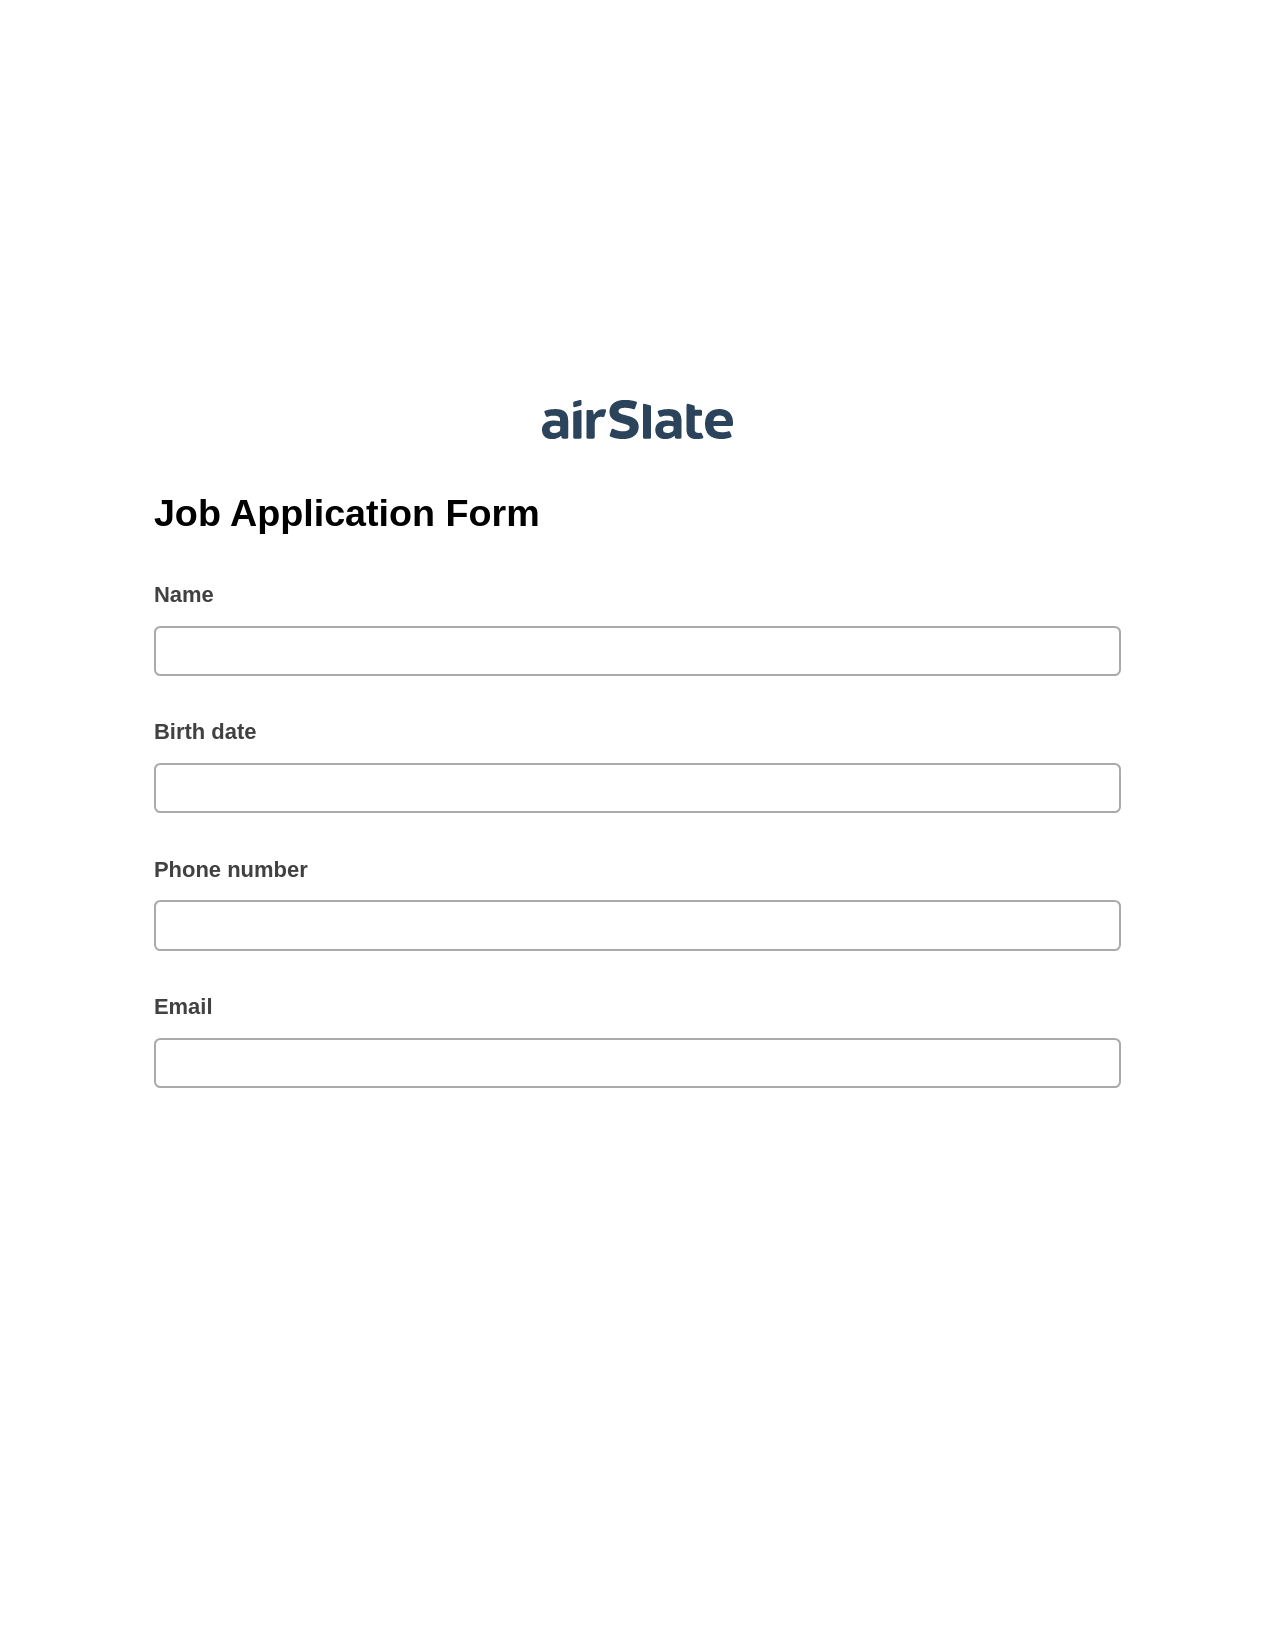 Multirole Job Application Form Pre-fill Dropdowns from Office 365 Excel Bot, Audit Trail Bot, Slack Notification Postfinish Bot